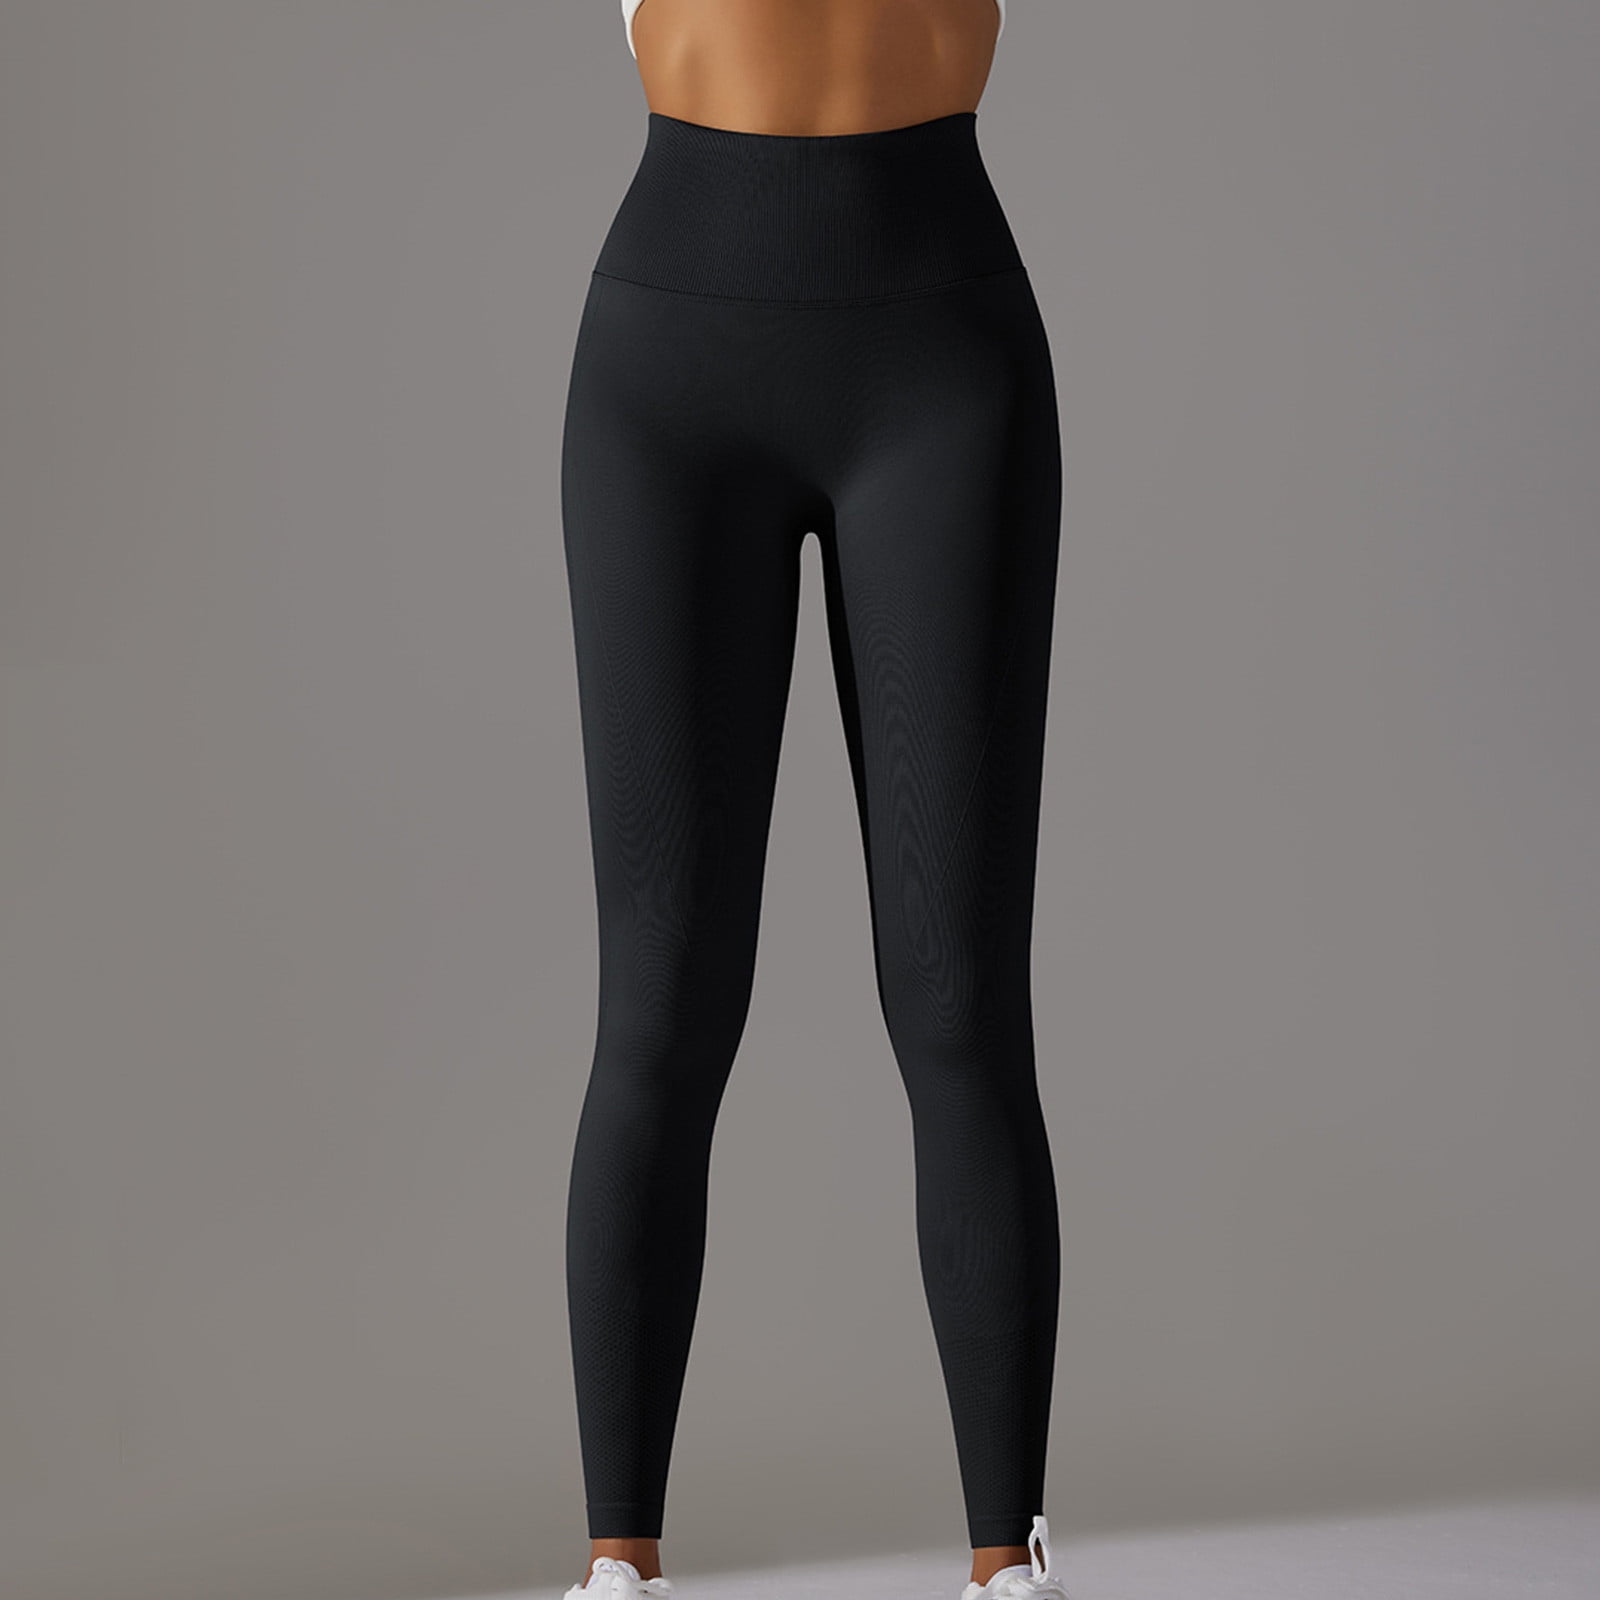 Tdoqot Workout Leggings for Women- Cotton Gym Stretch Tummy